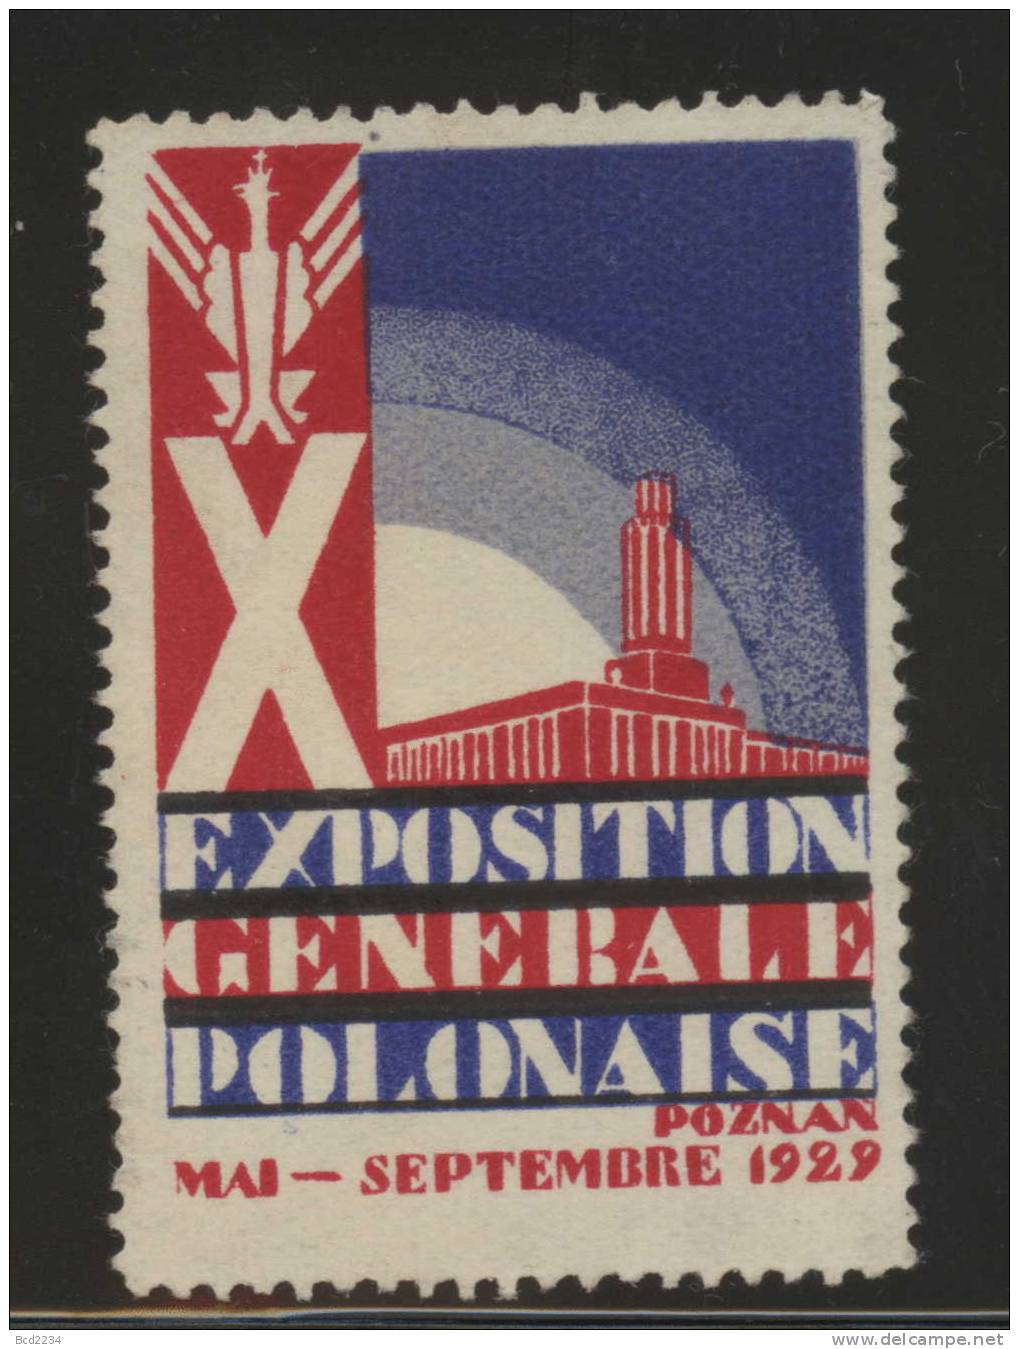 POLAND 1929 POZNAN EXHIBITION TRADE FAIR POSTER STAMP TYPE 5 FRENCH WRITING NO GUM - Steuermarken